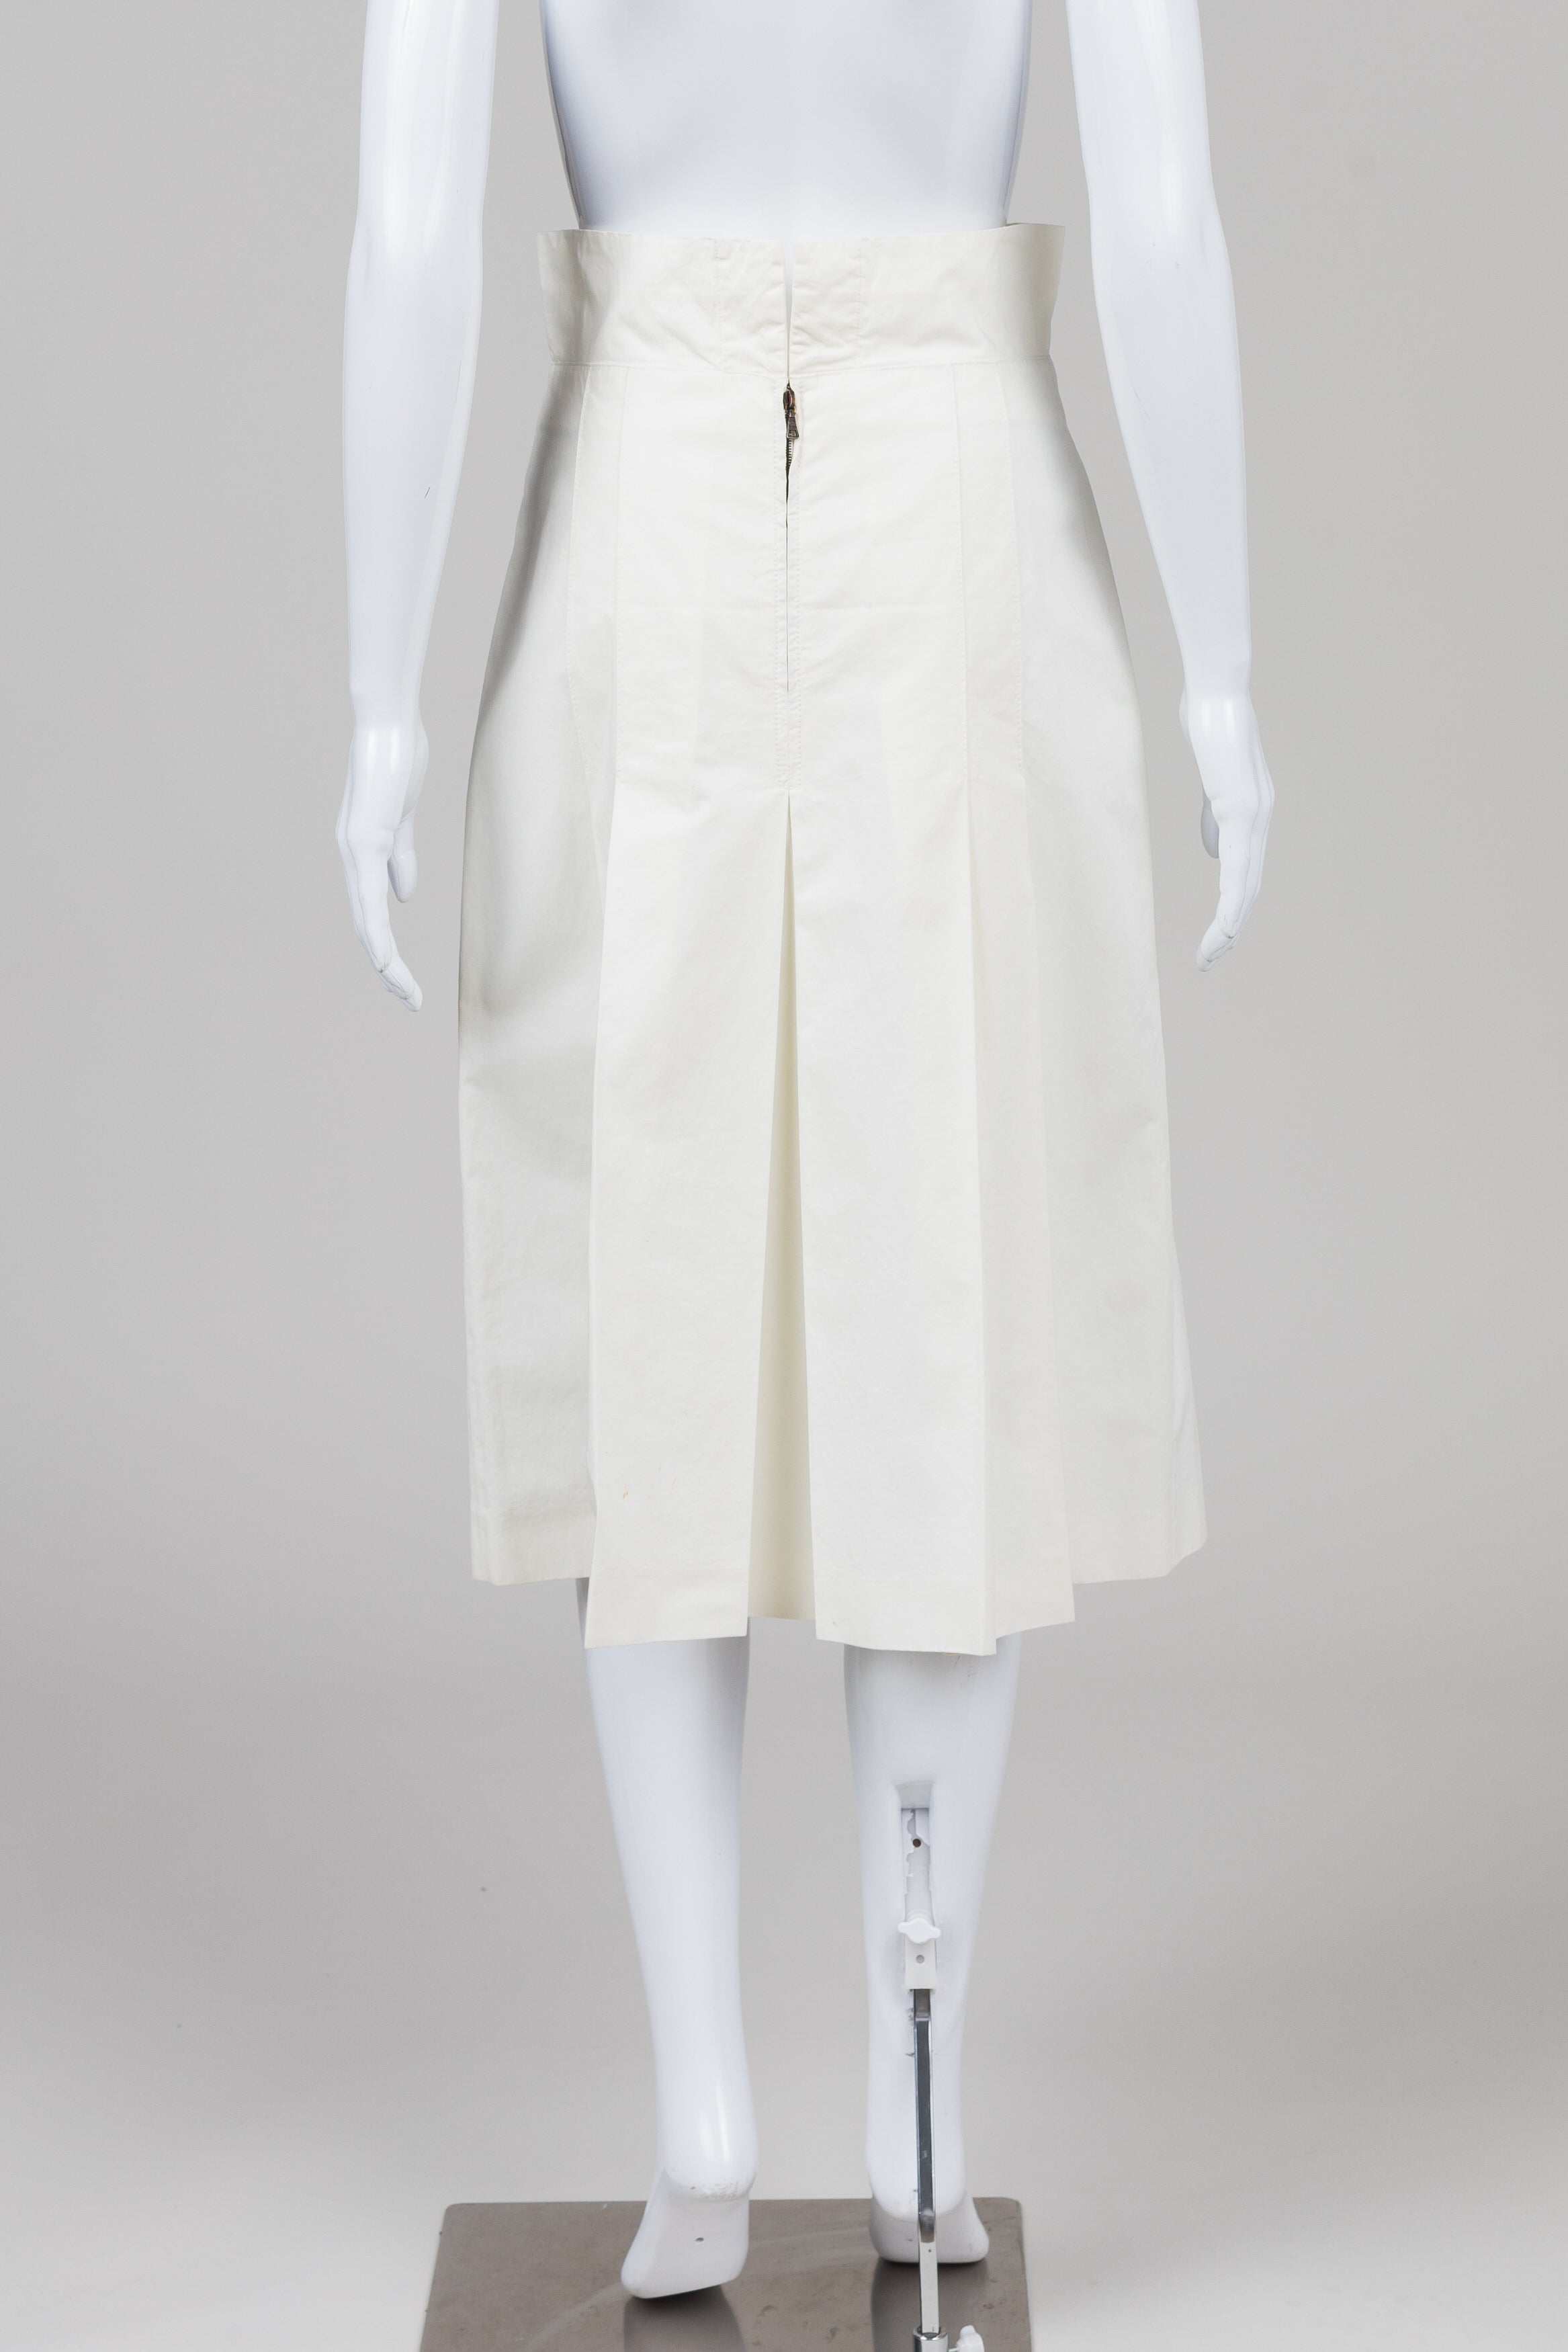 Prada Off White Pleated Skirt (40)